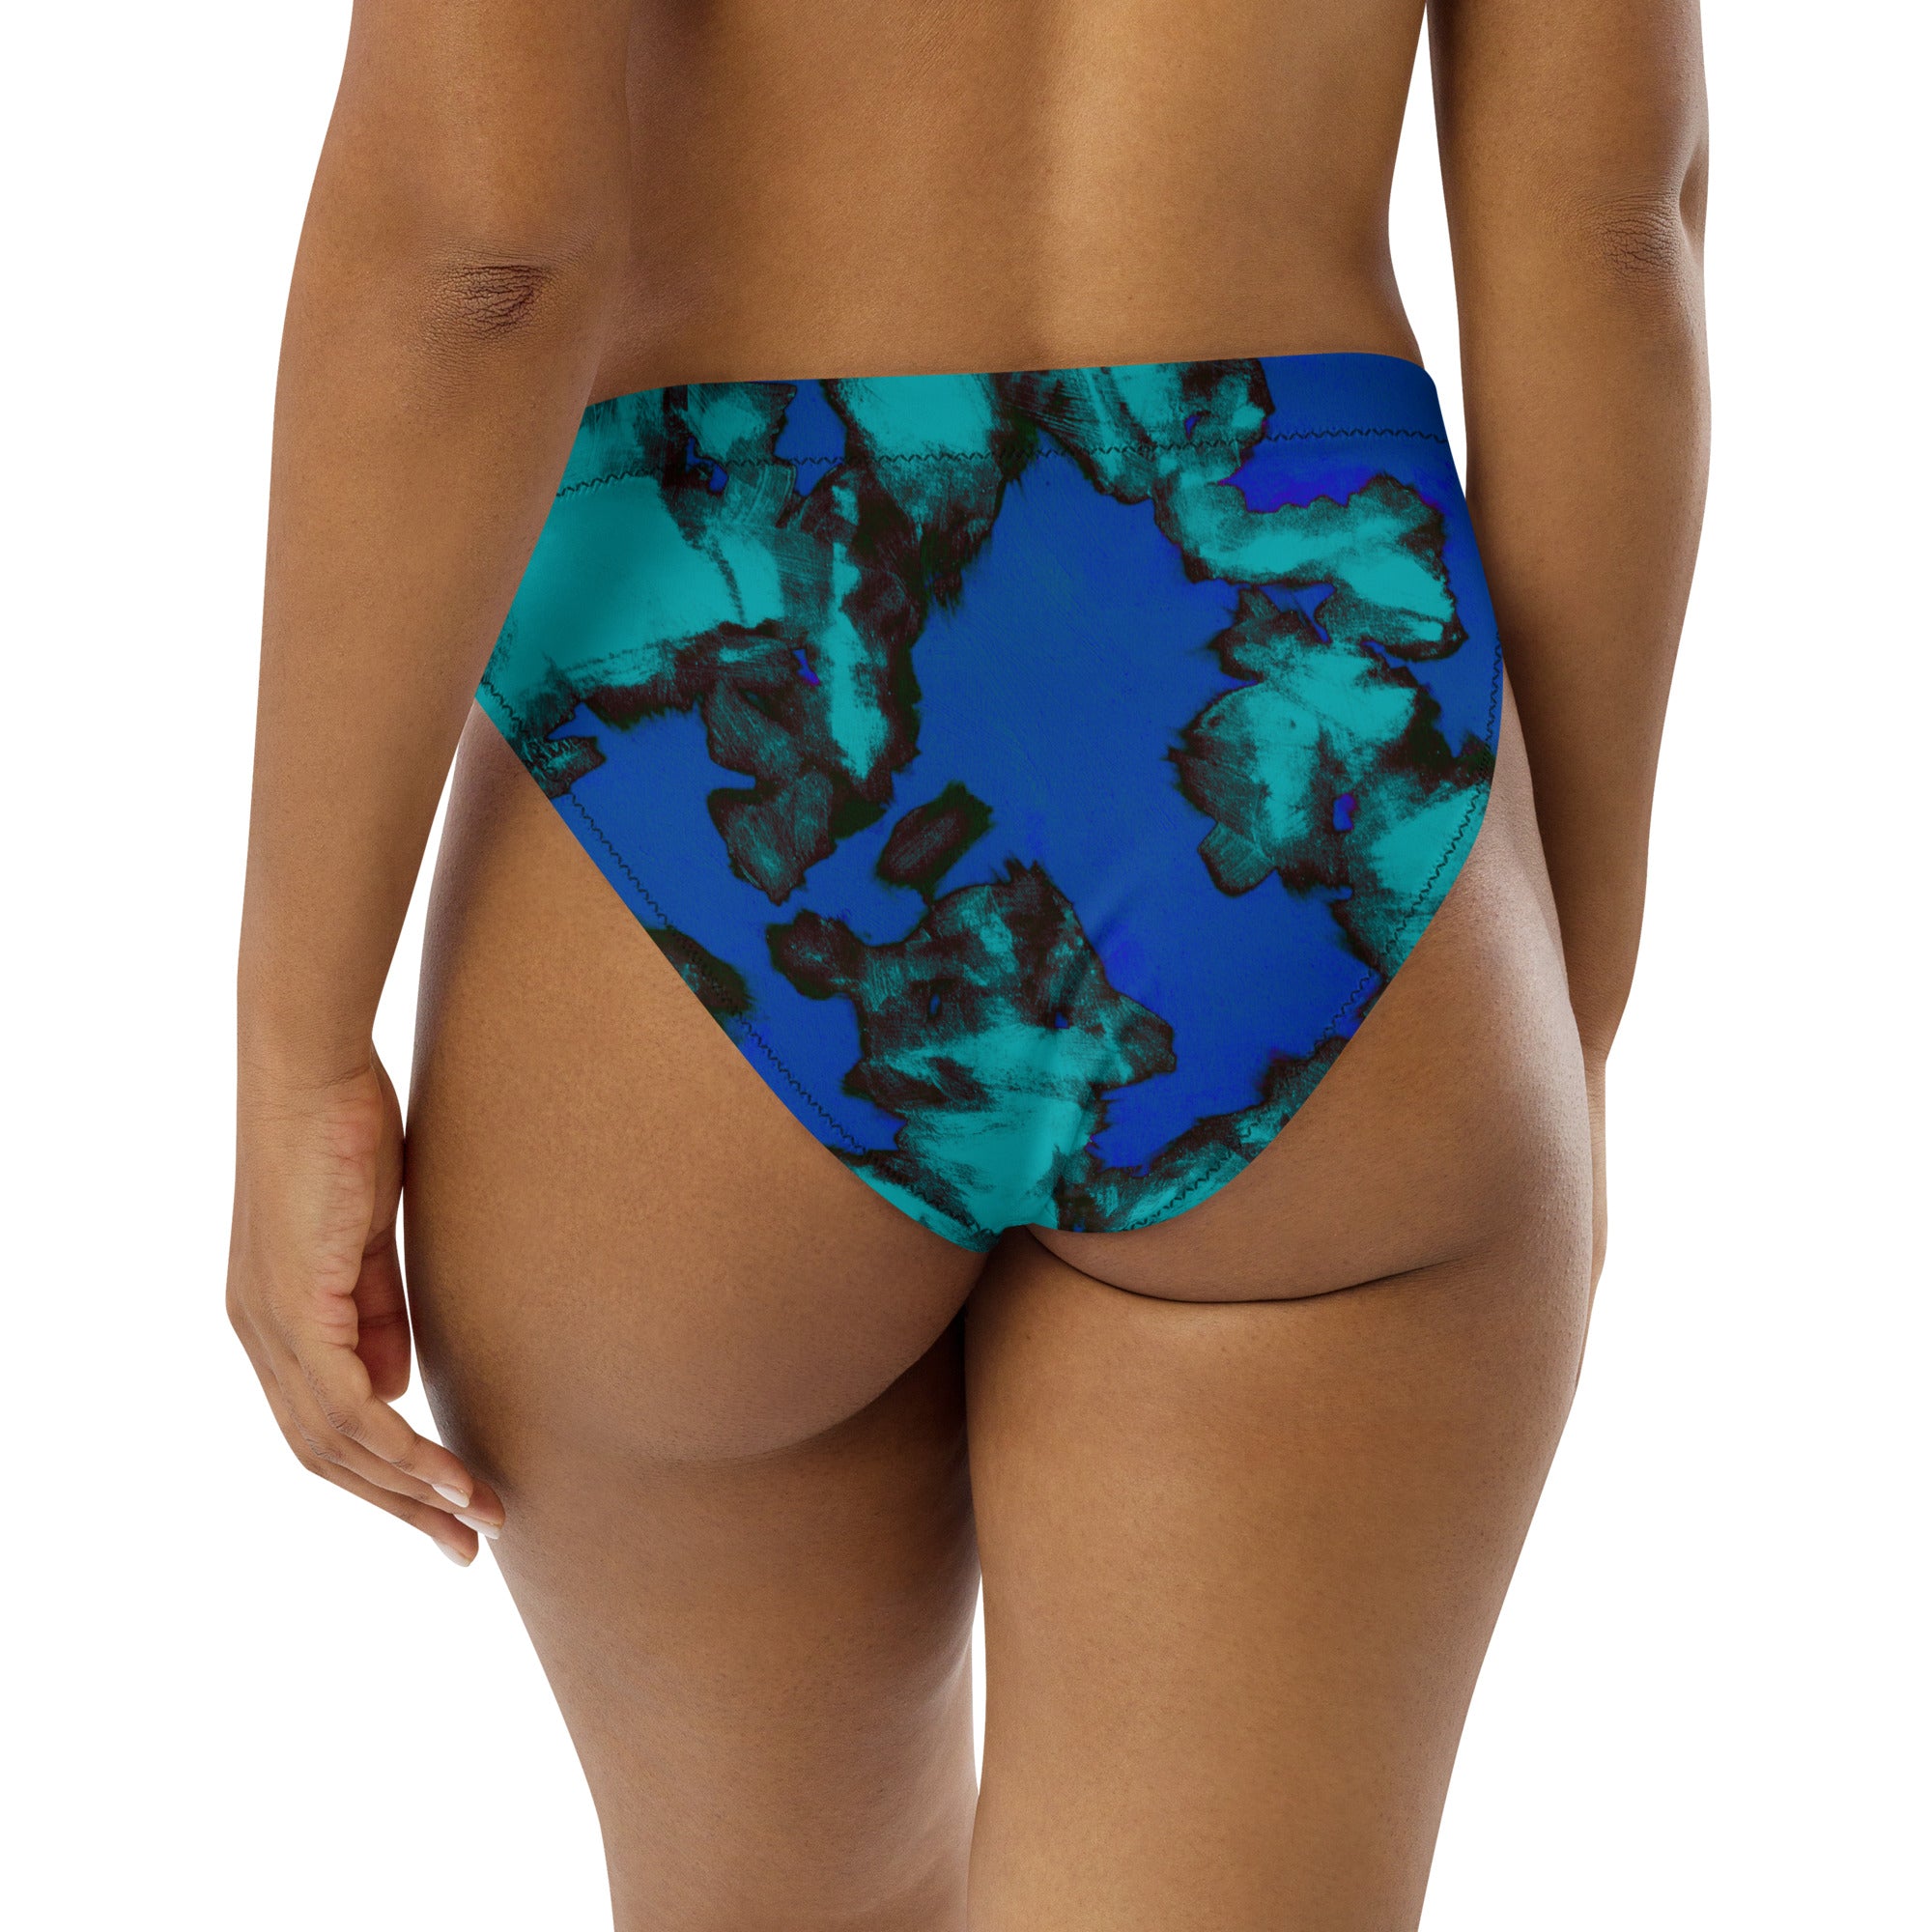 Blue and teal painted Recycled high-waisted bikini bottom